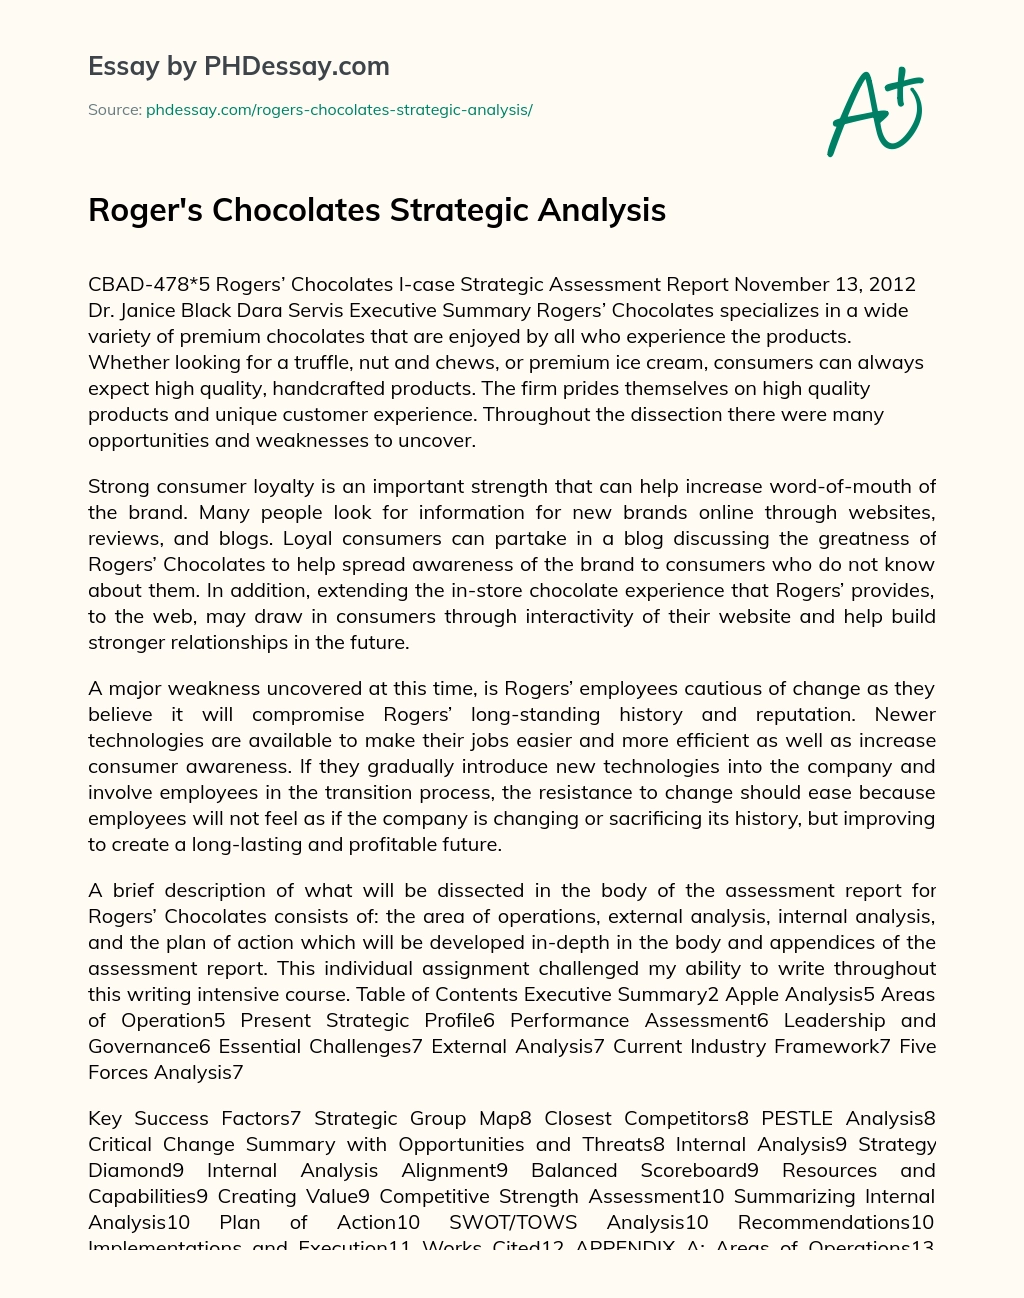 Roger’s Chocolates Strategic Analysis essay